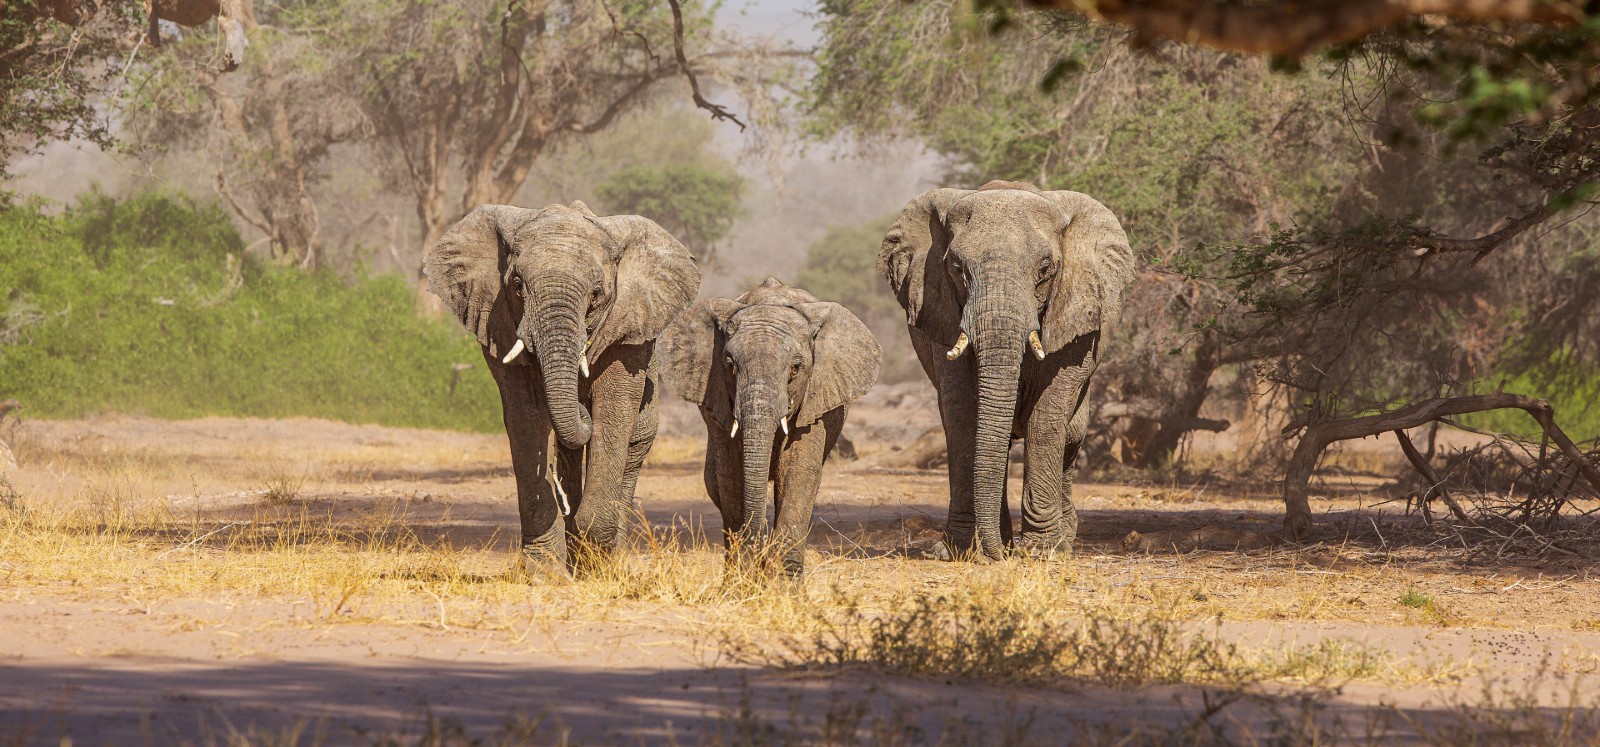 A photo of three elephants walking through a Namibian landscape.